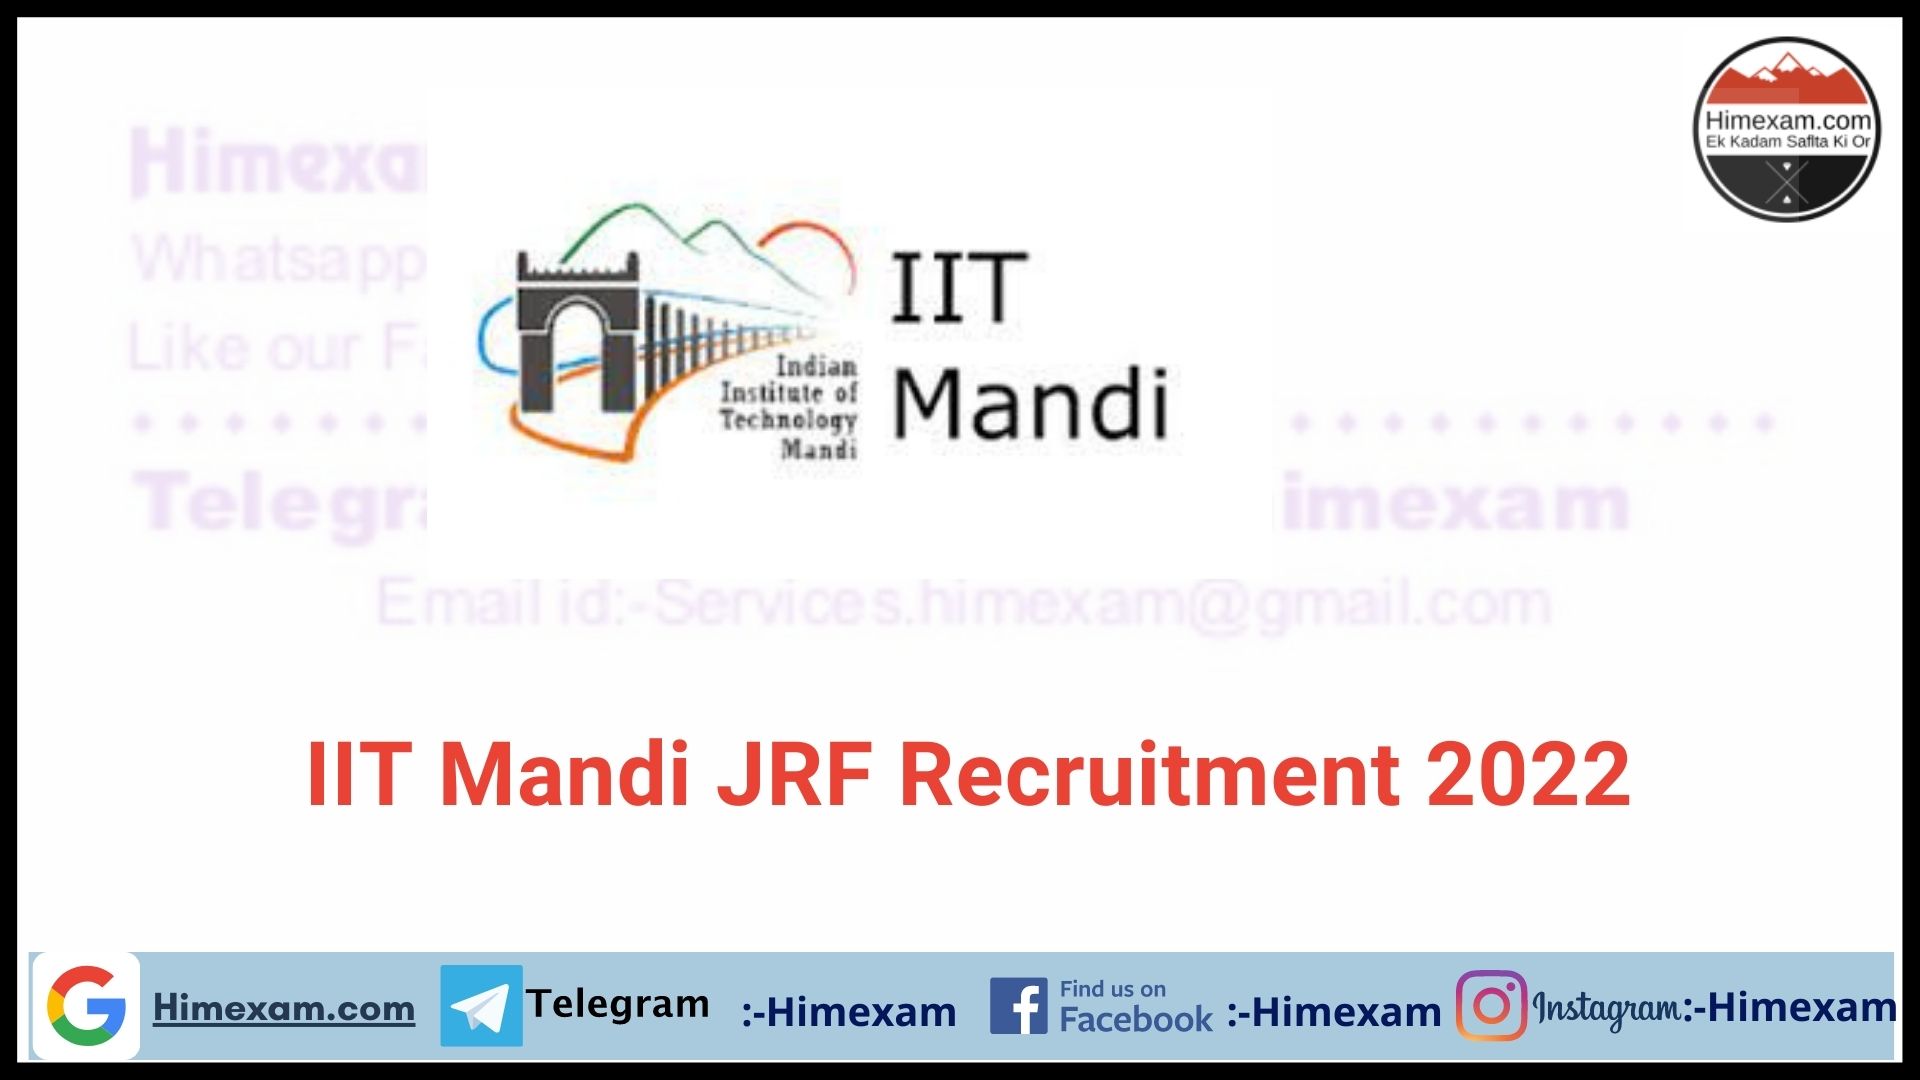 IIT Mandi JRF Recruitment 2022